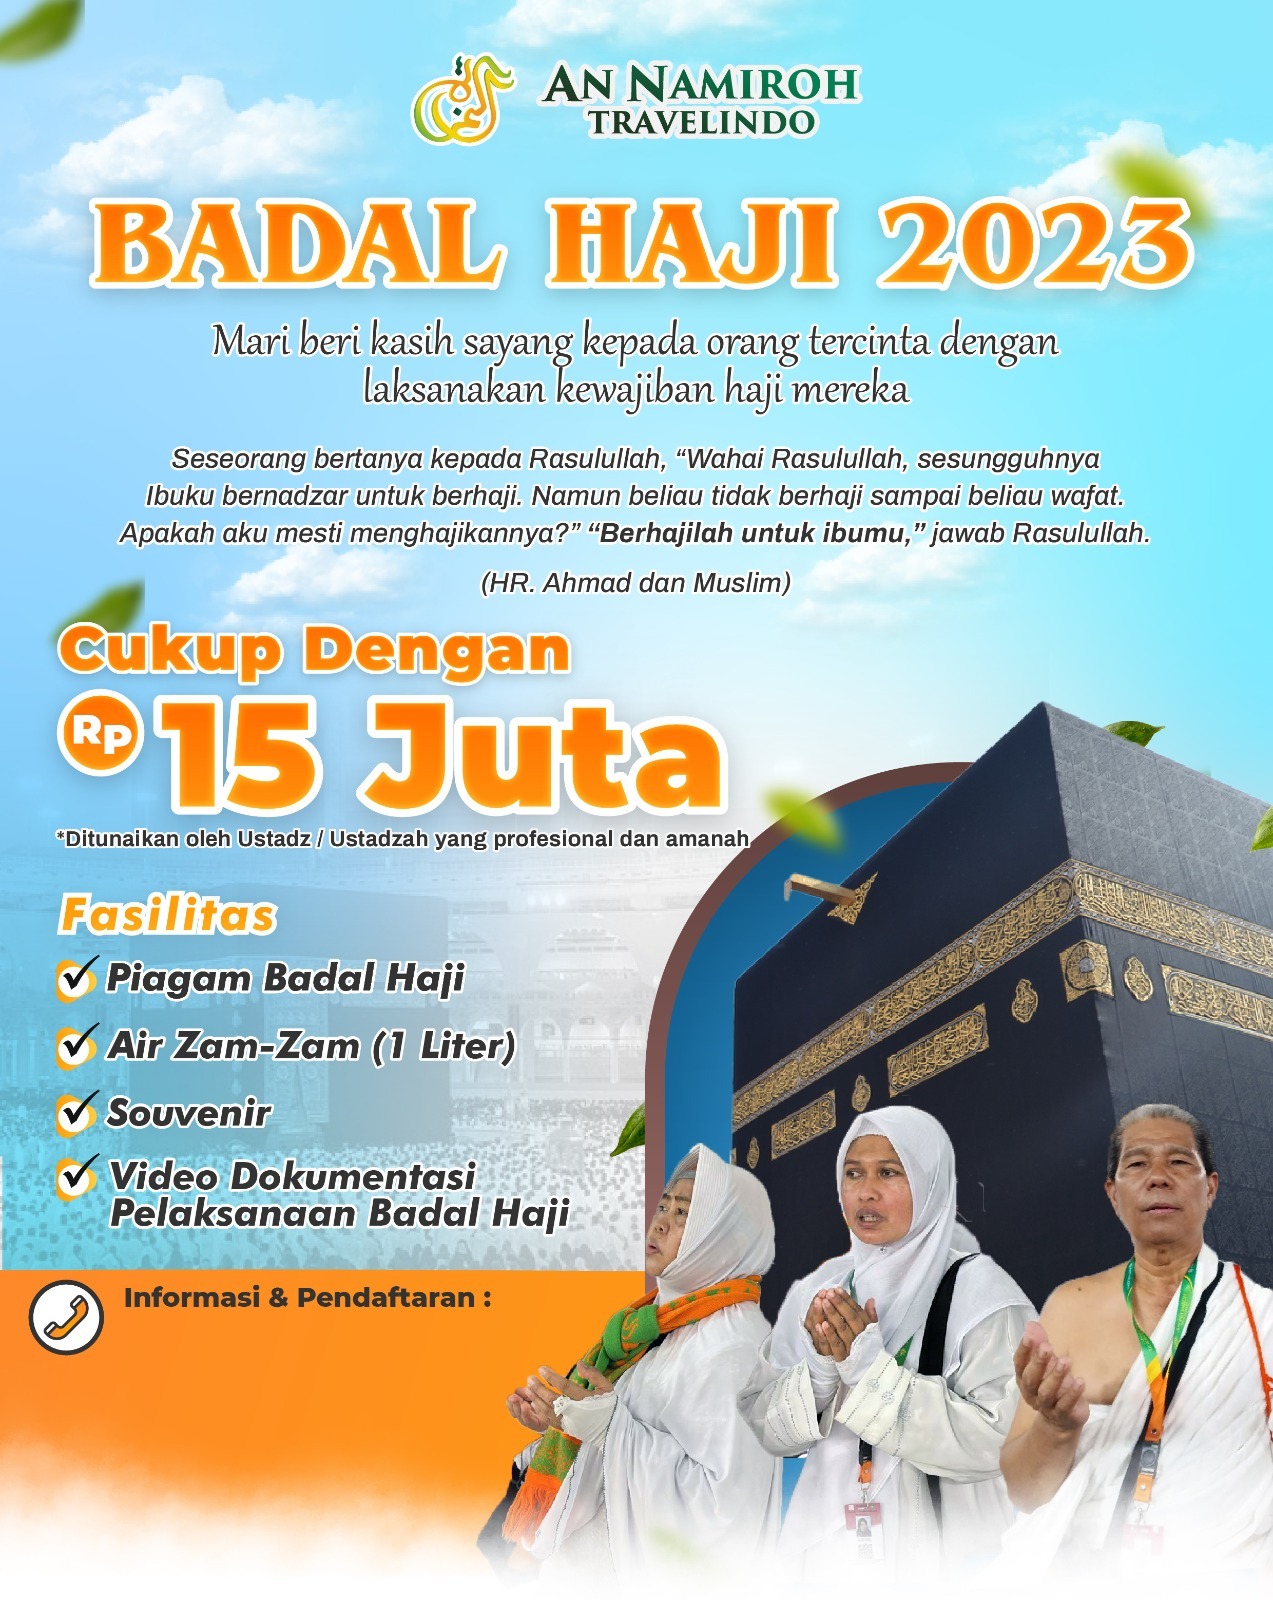 Badal Haji